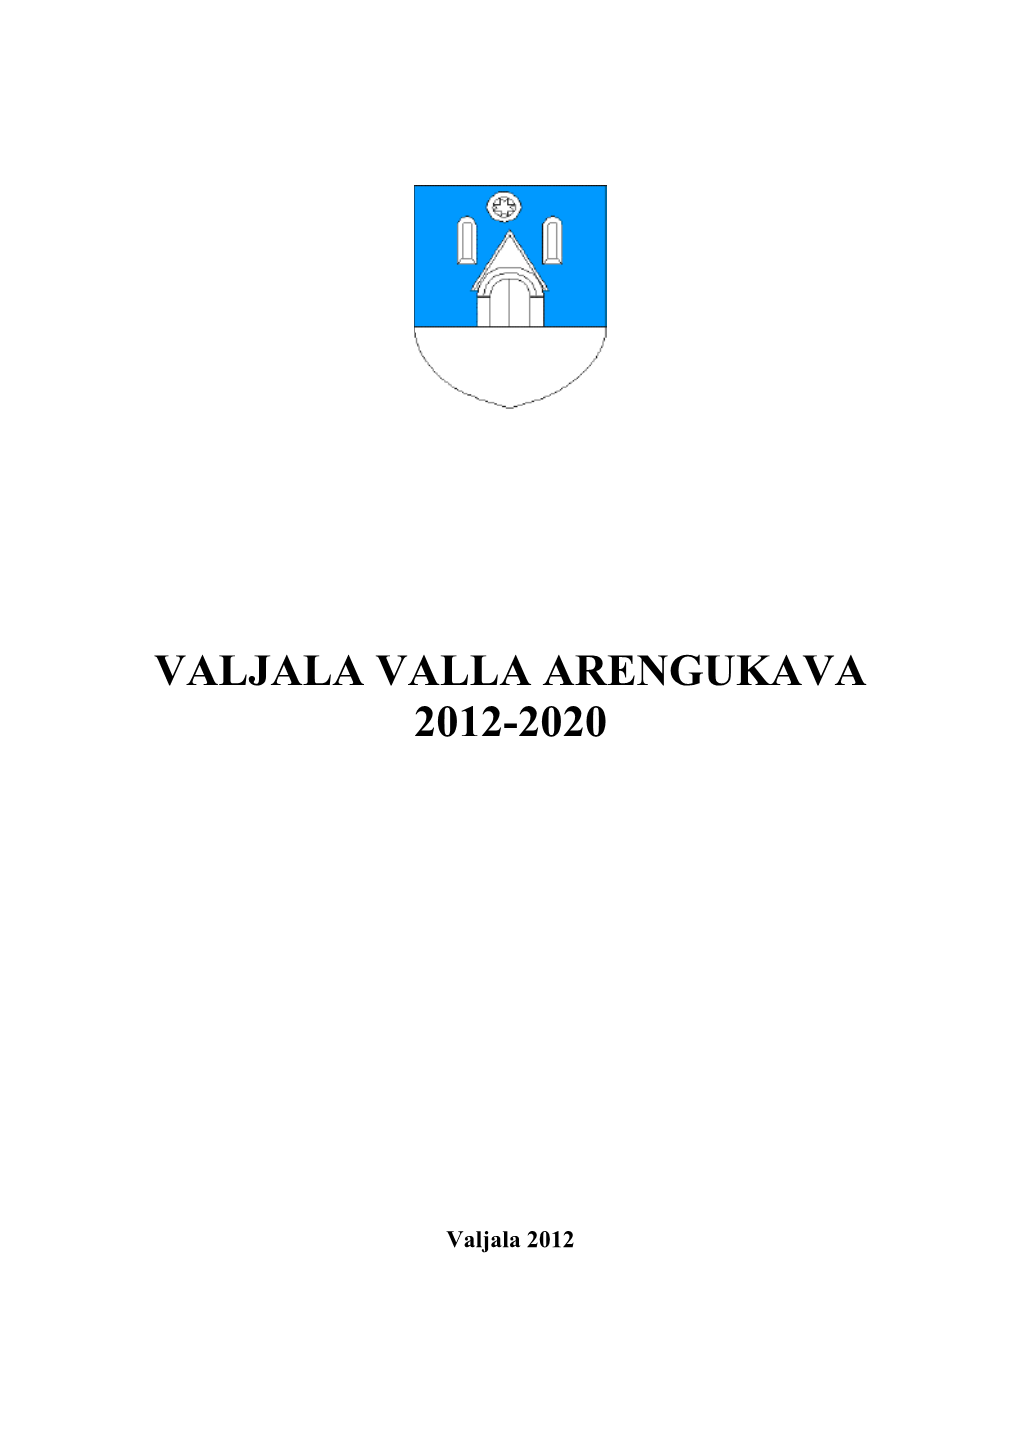 Valjala Valla Arengukava 2012-2020